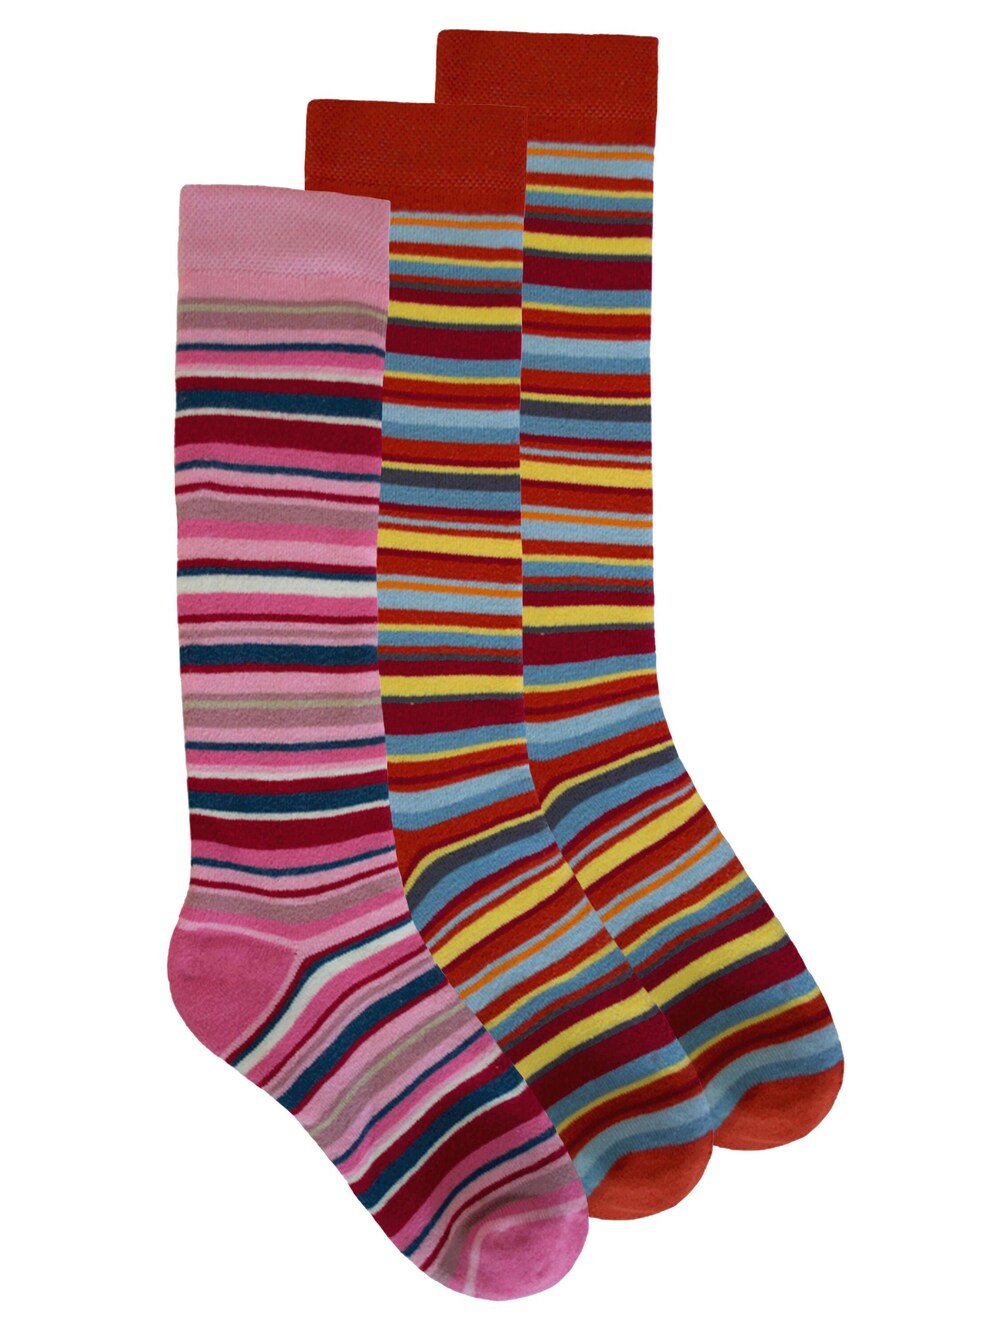 Носки Normani, смешанные цвета носки normani смешанные цвета